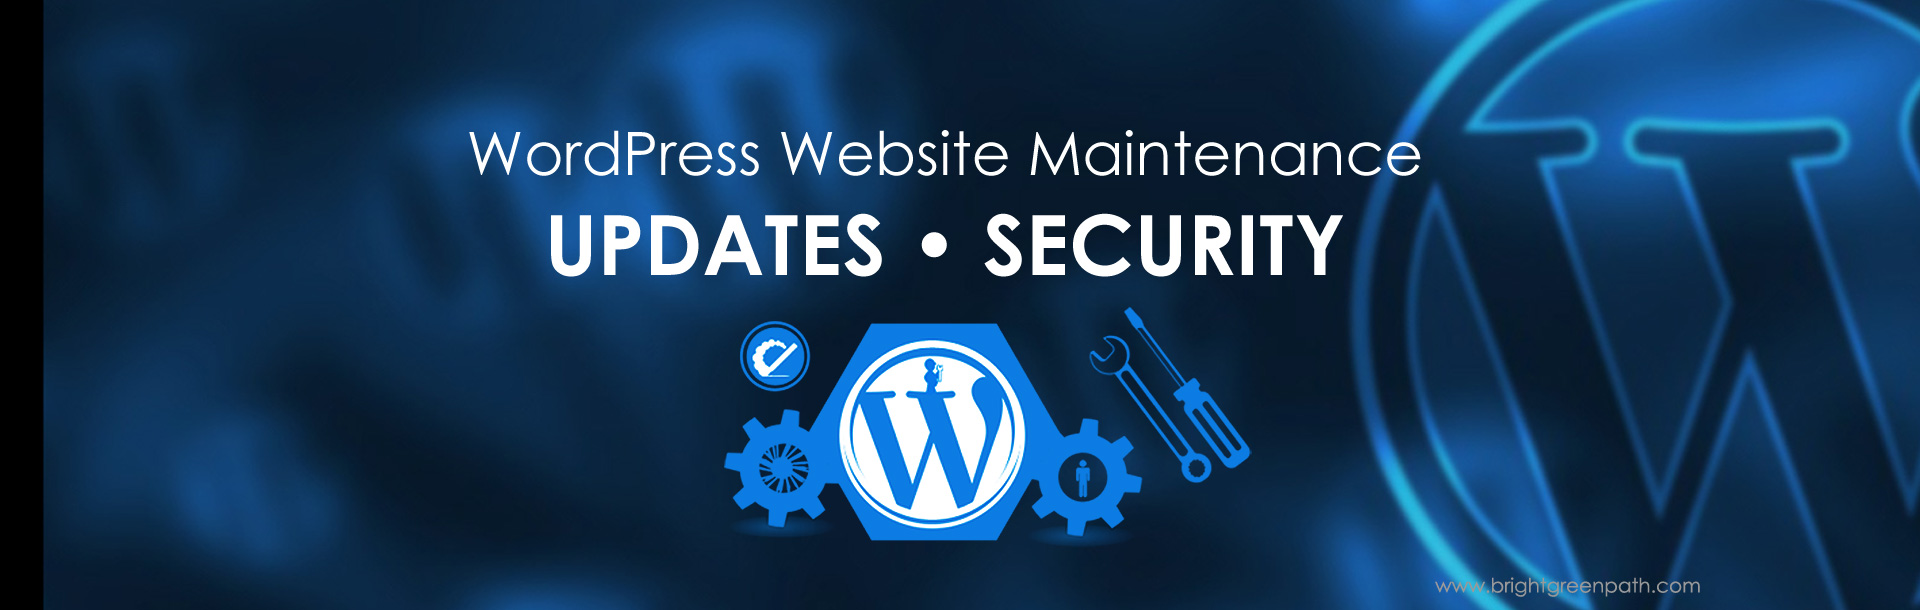 Florida WordPress Website Maintenance Services